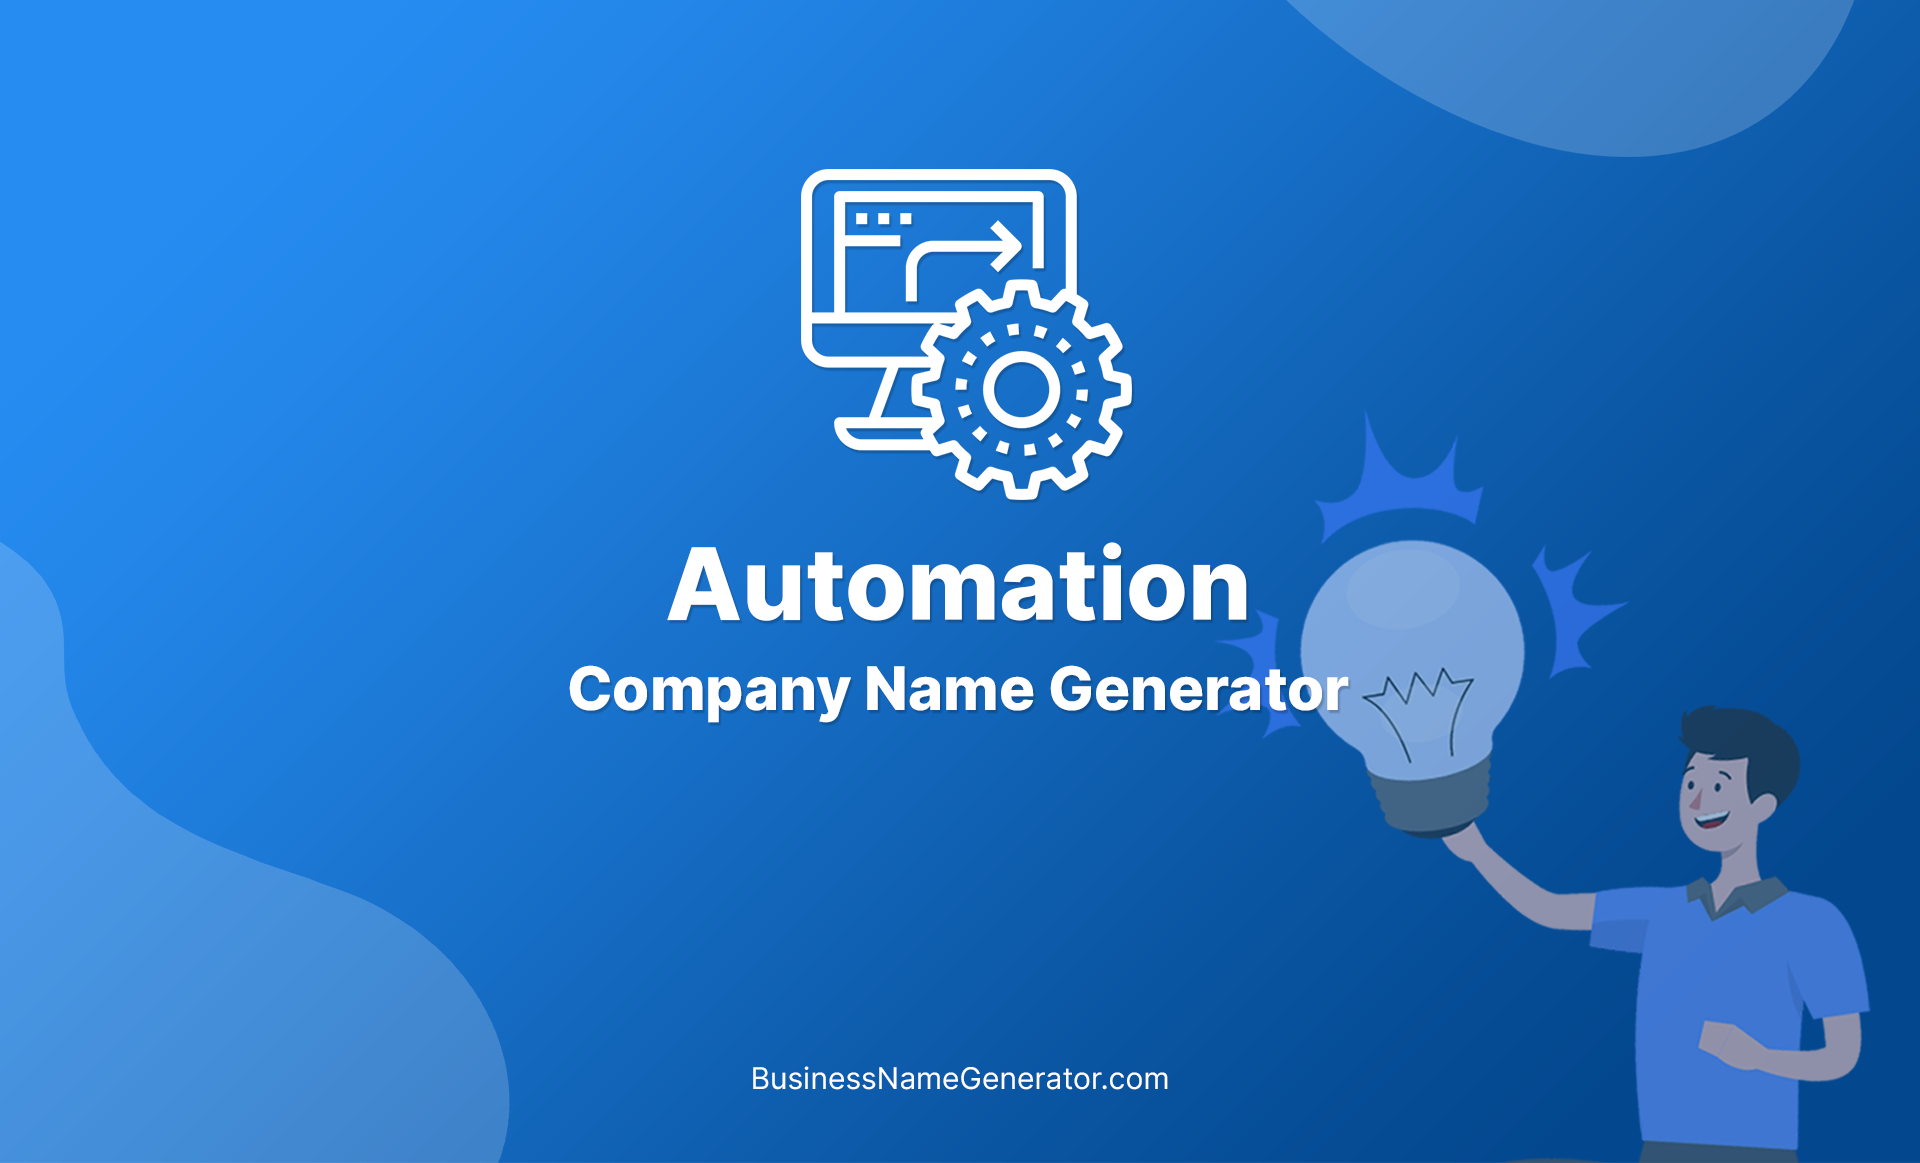 Automation Company Name Generator